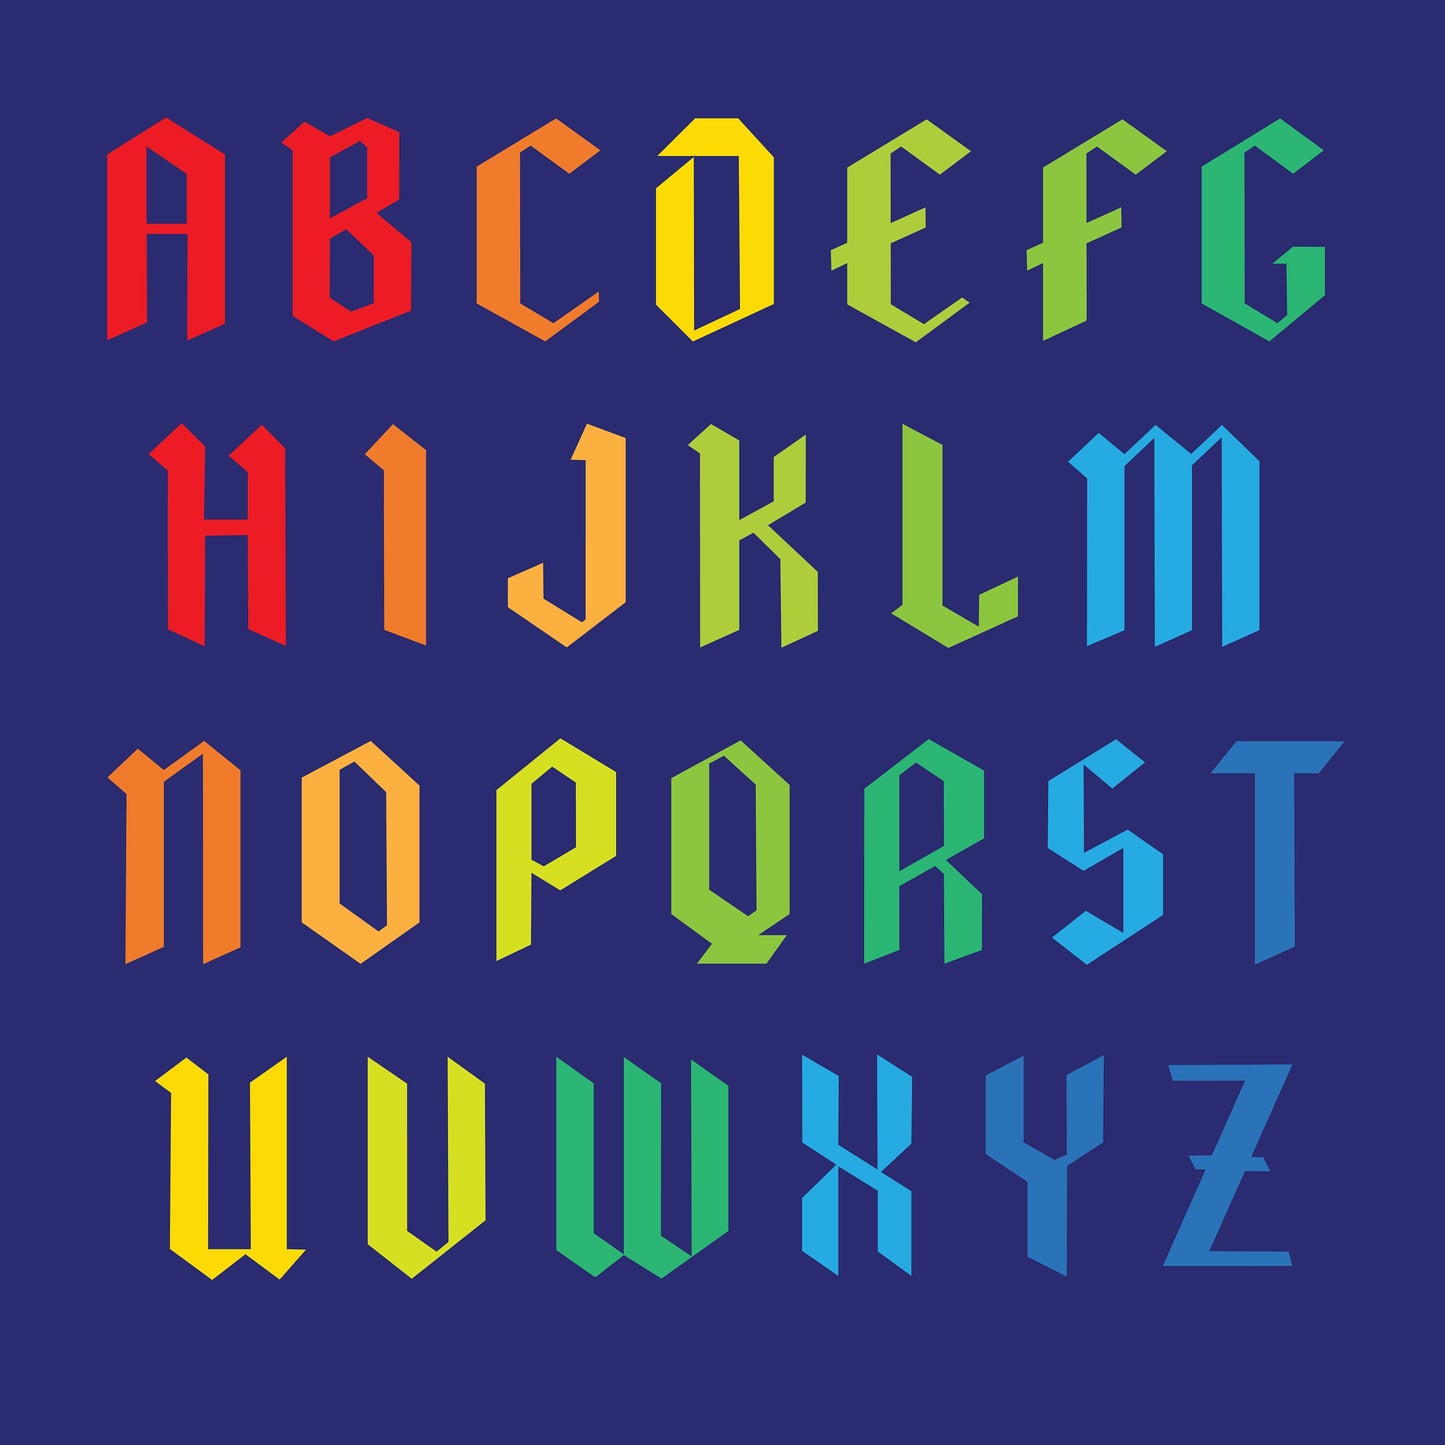 Blackletter Uppercase Alphabet Quilt Pattern - PDF